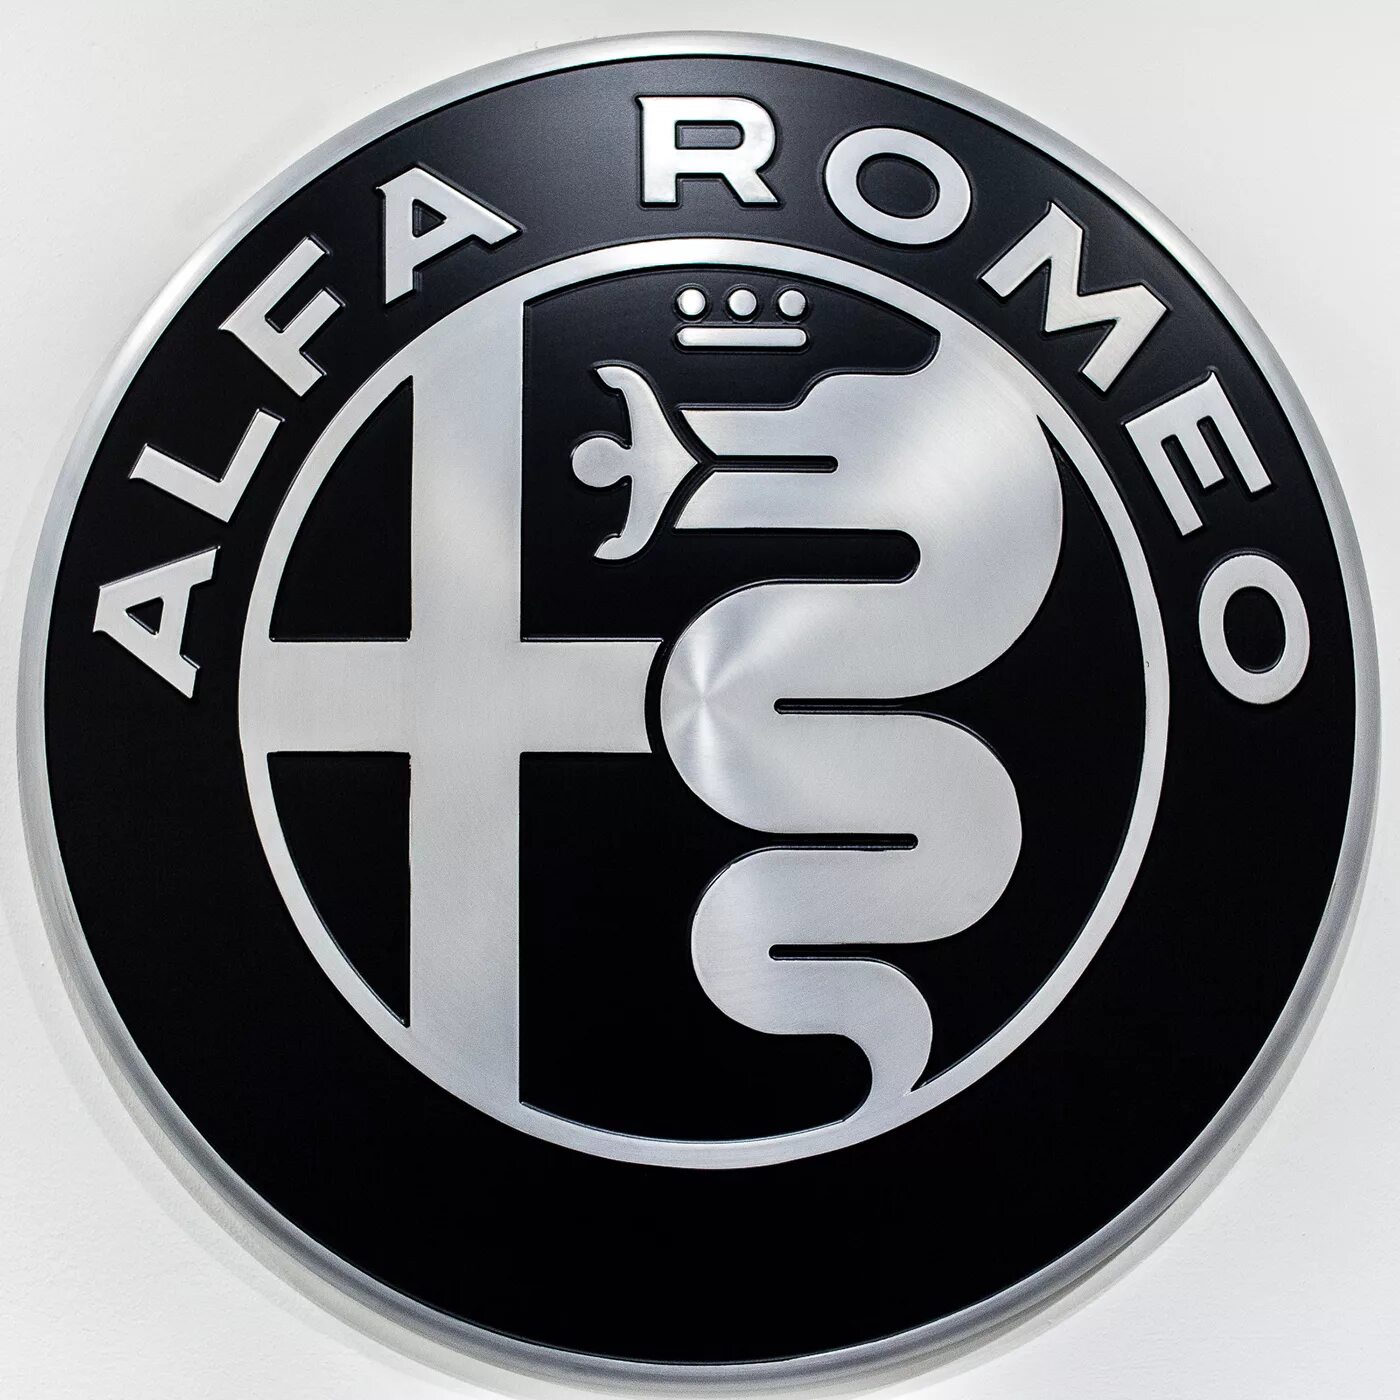 Знак альфа ромео. Alfa Romeo эмблема. Альфа Ромео марка. Логотип авто Альфа Ромео. Знак автомобиля Альфа Ромео.